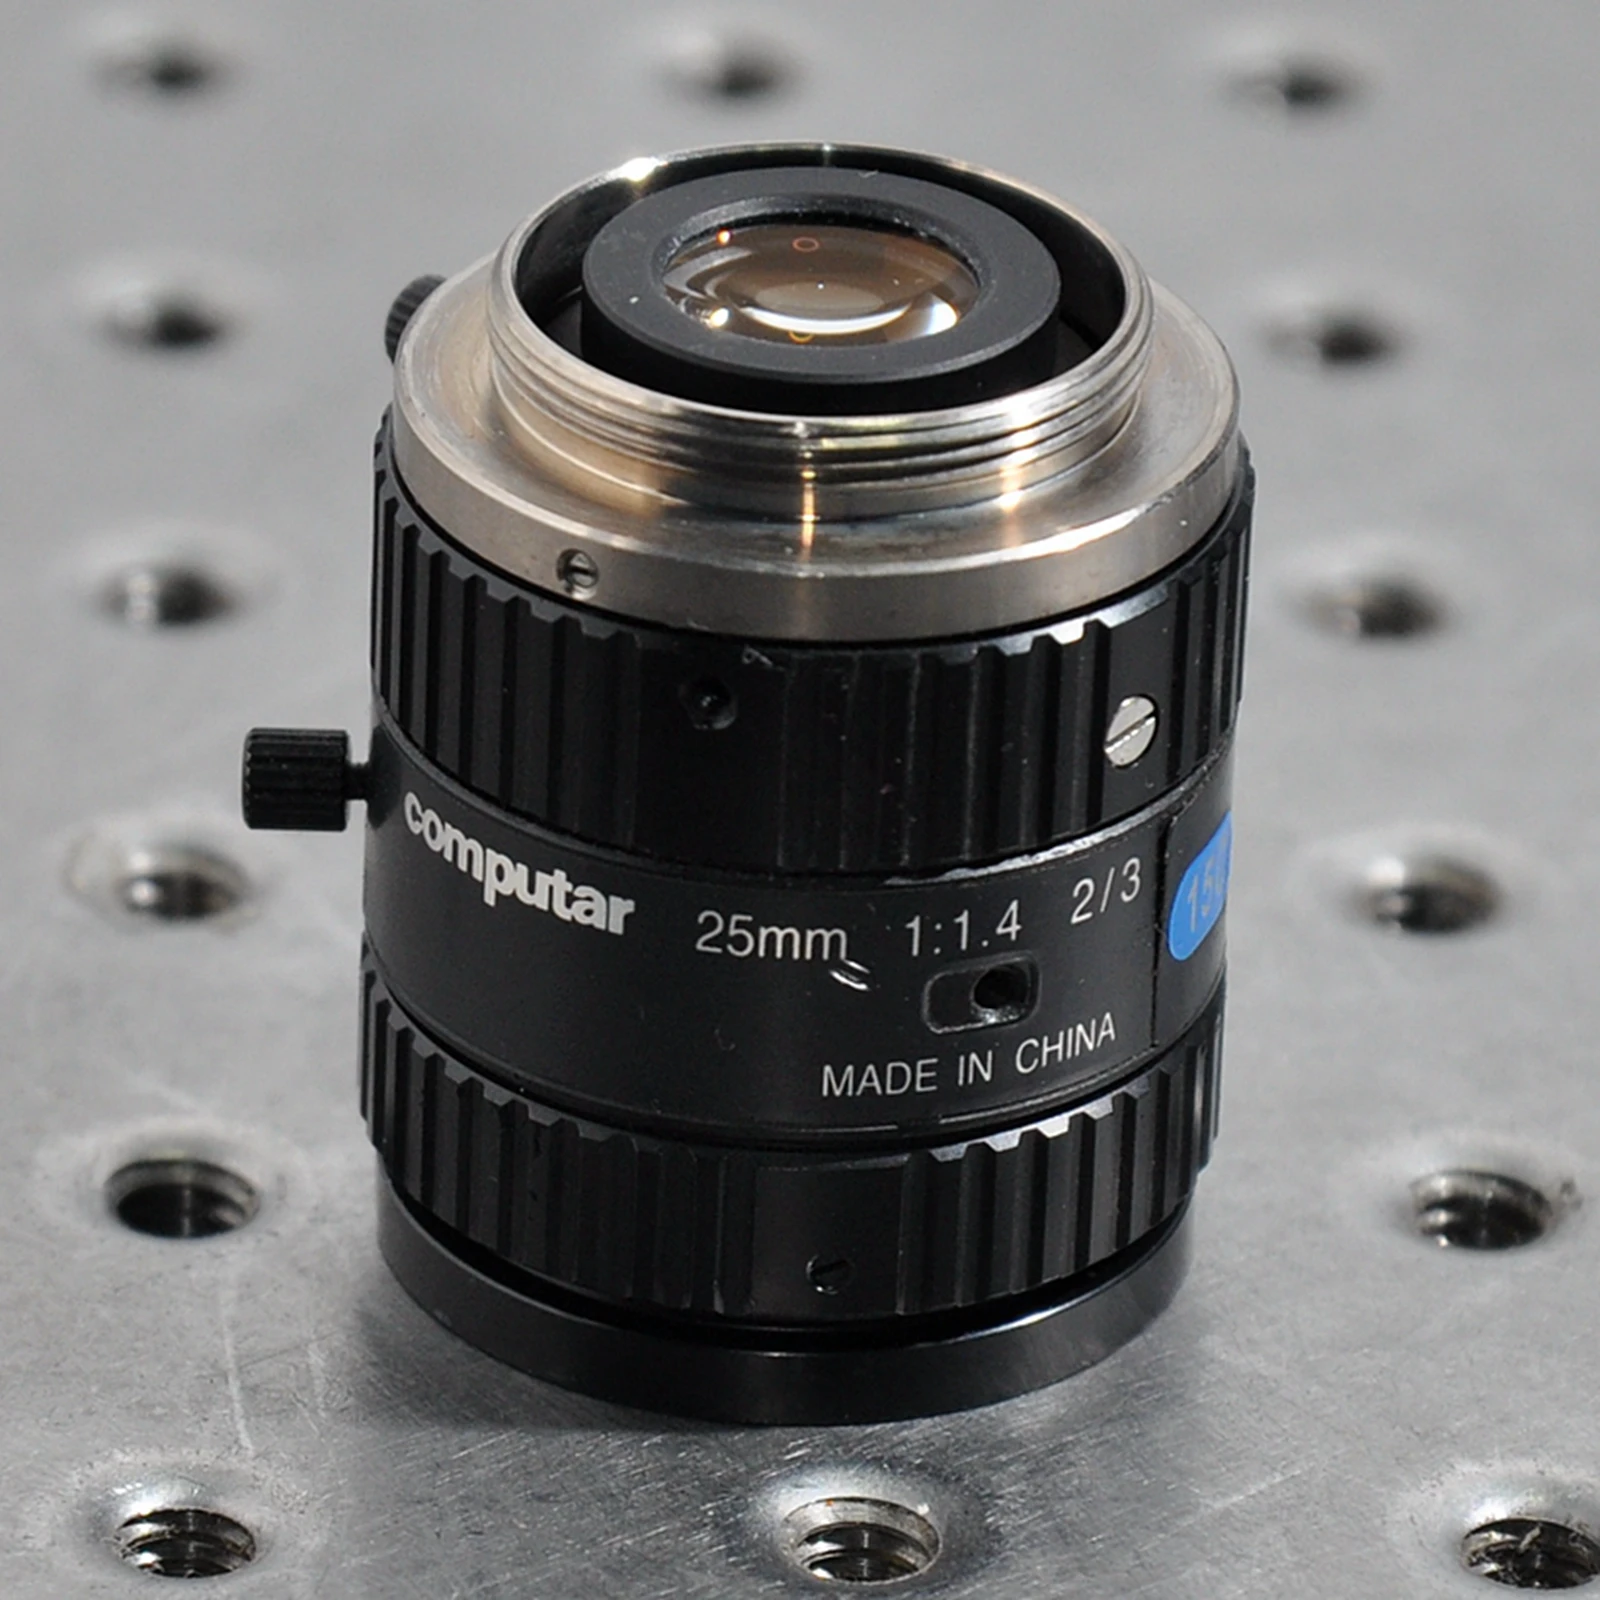 Computar 25mm 1:1.4 2 3 Industrial lens